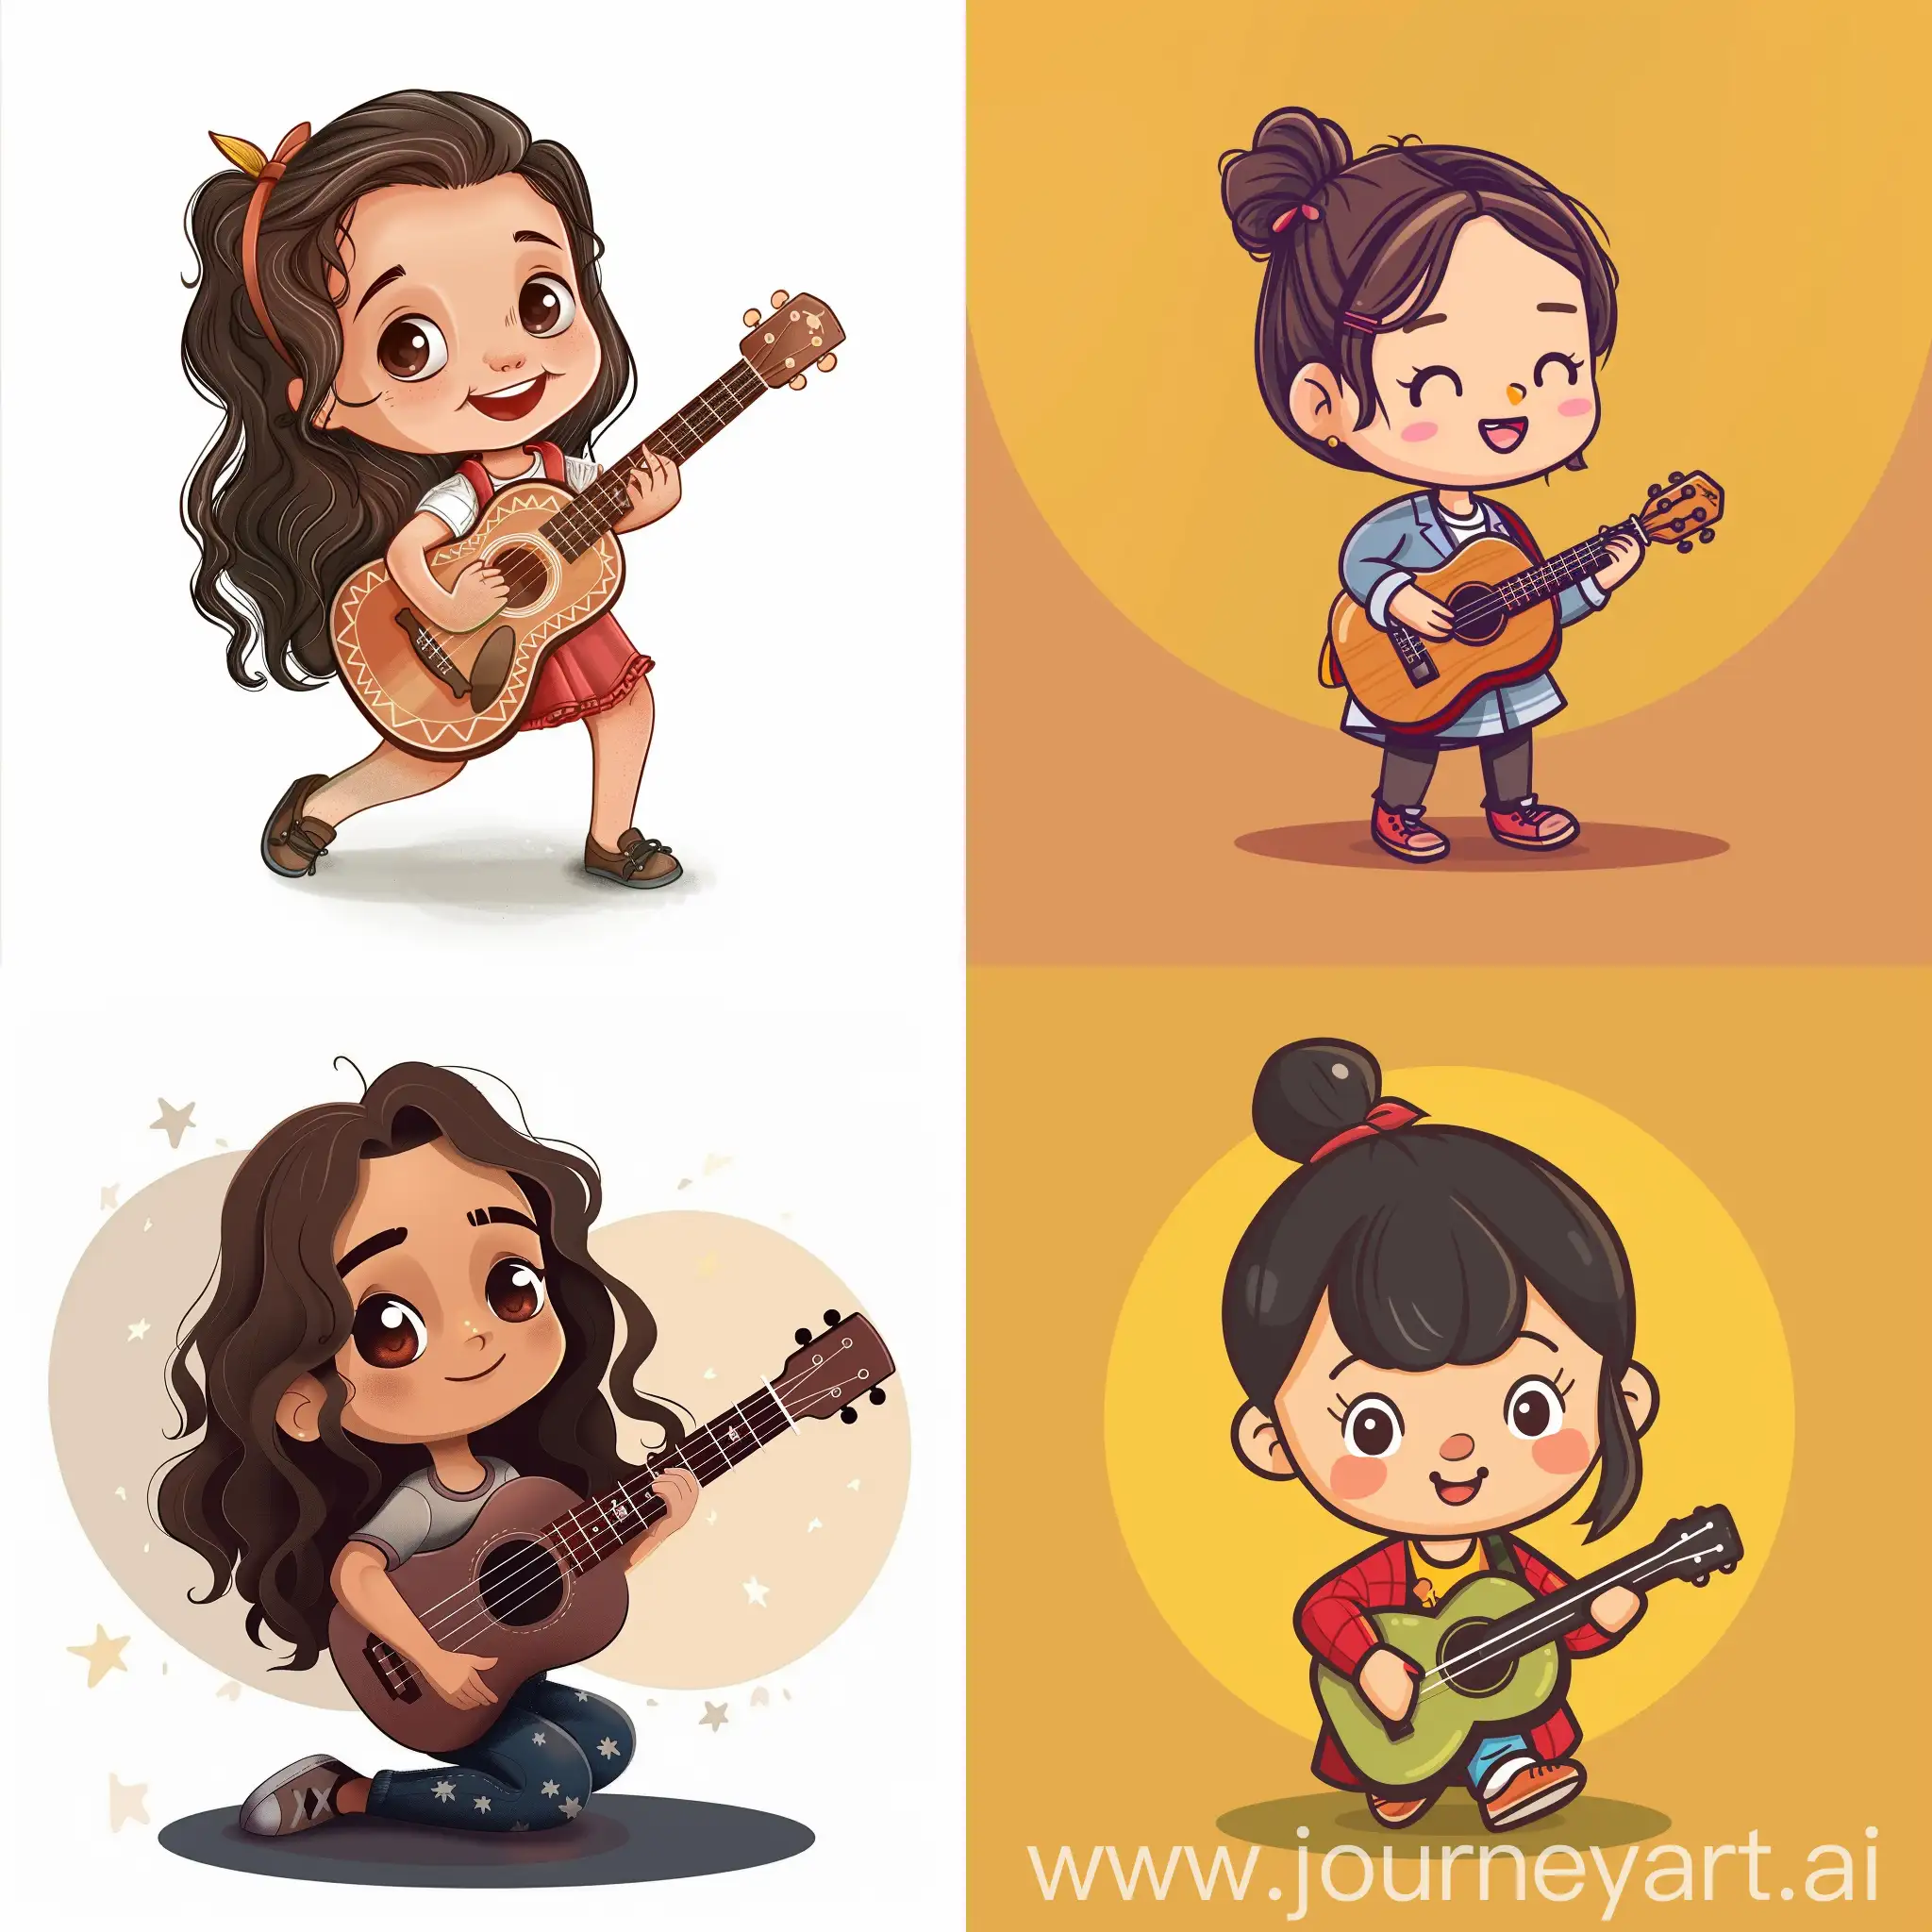 Adorable-Cartoon-Girl-Playing-Guitar-Fun-and-Vibrant-Musical-Illustration